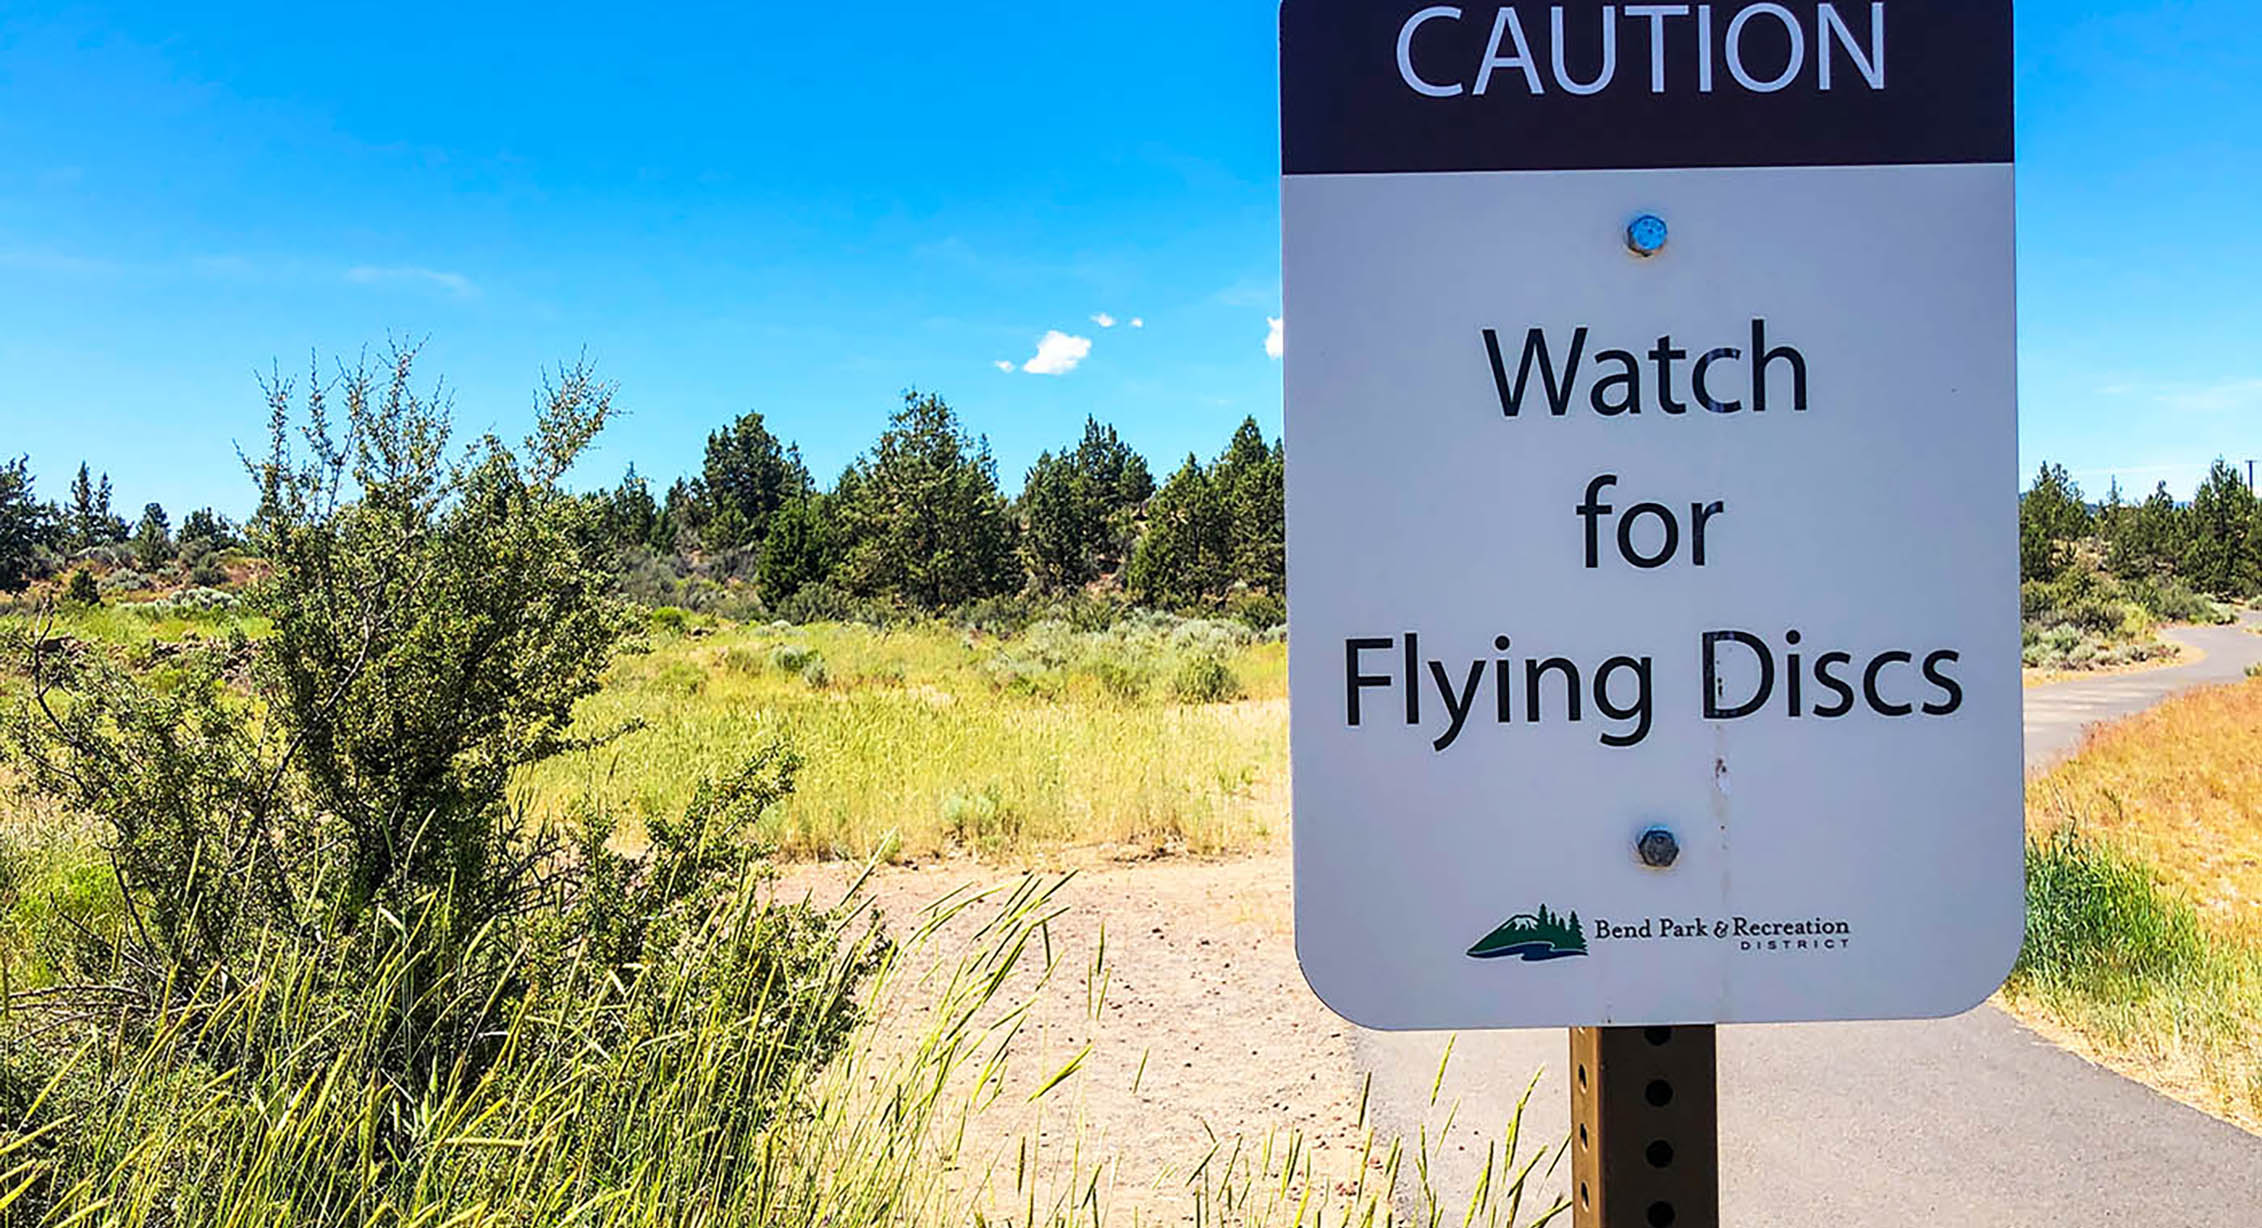 a warning sign near a disc golf course